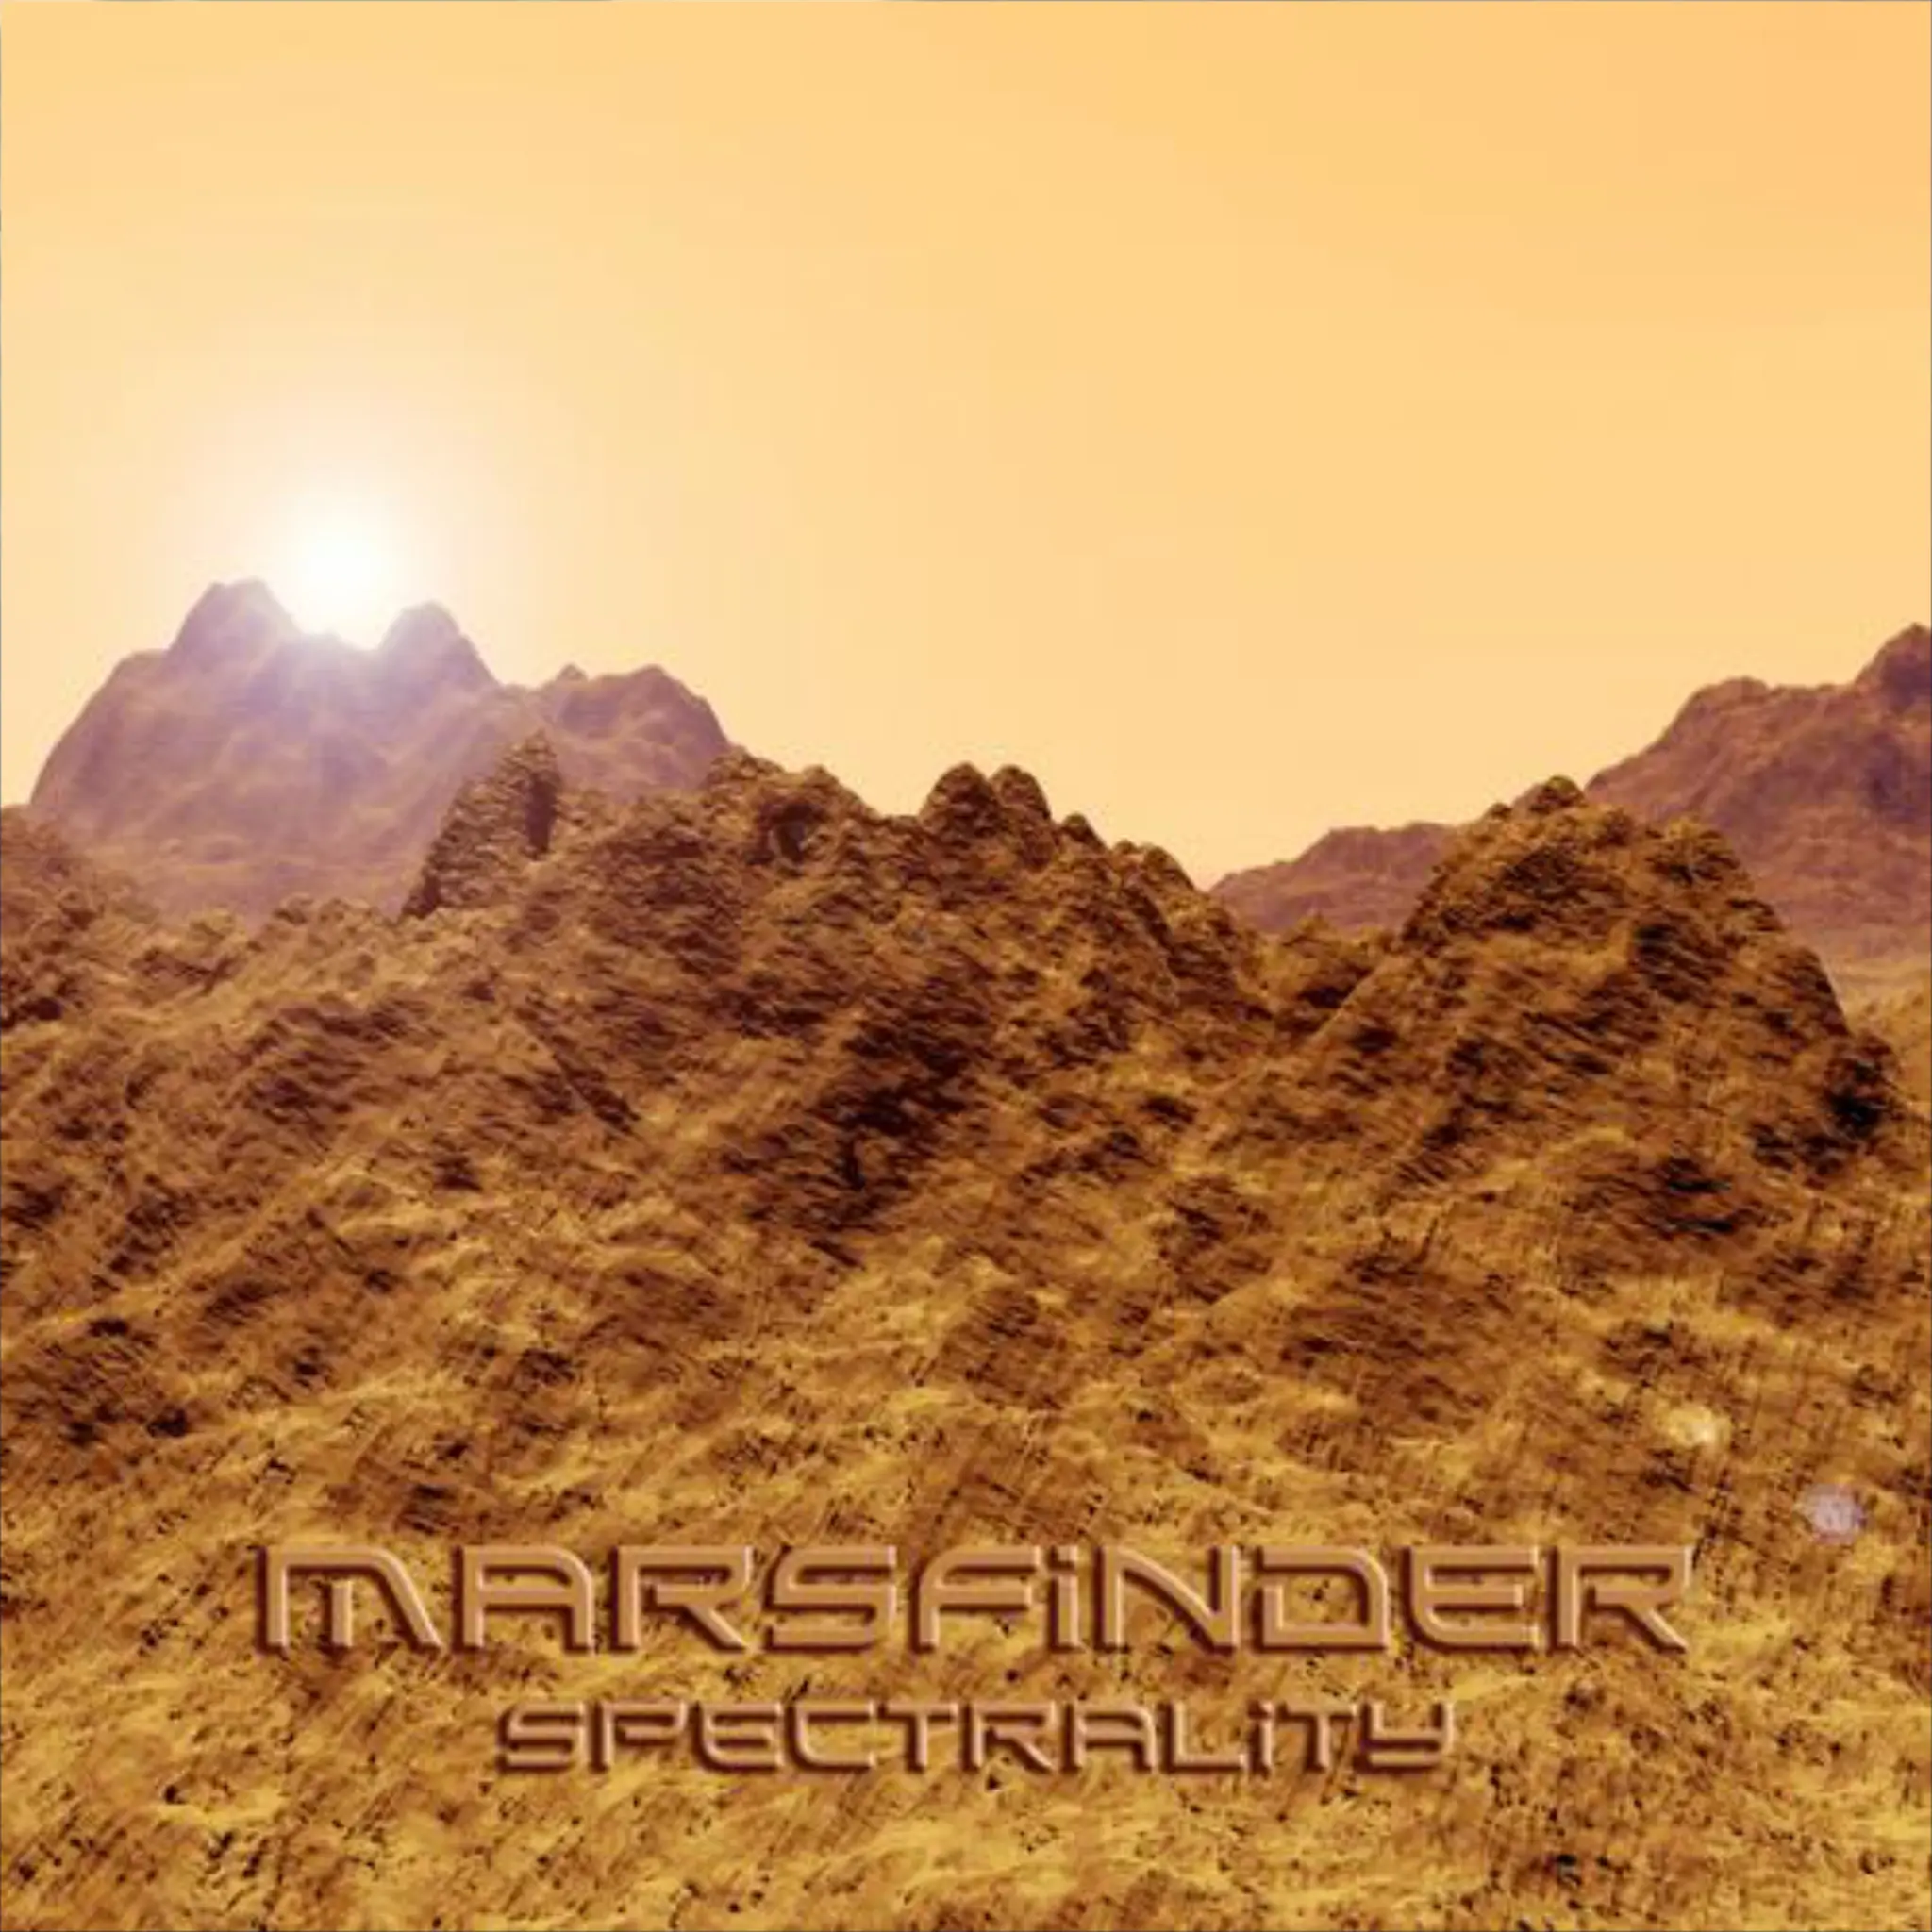 Marsfinder - Spectrality